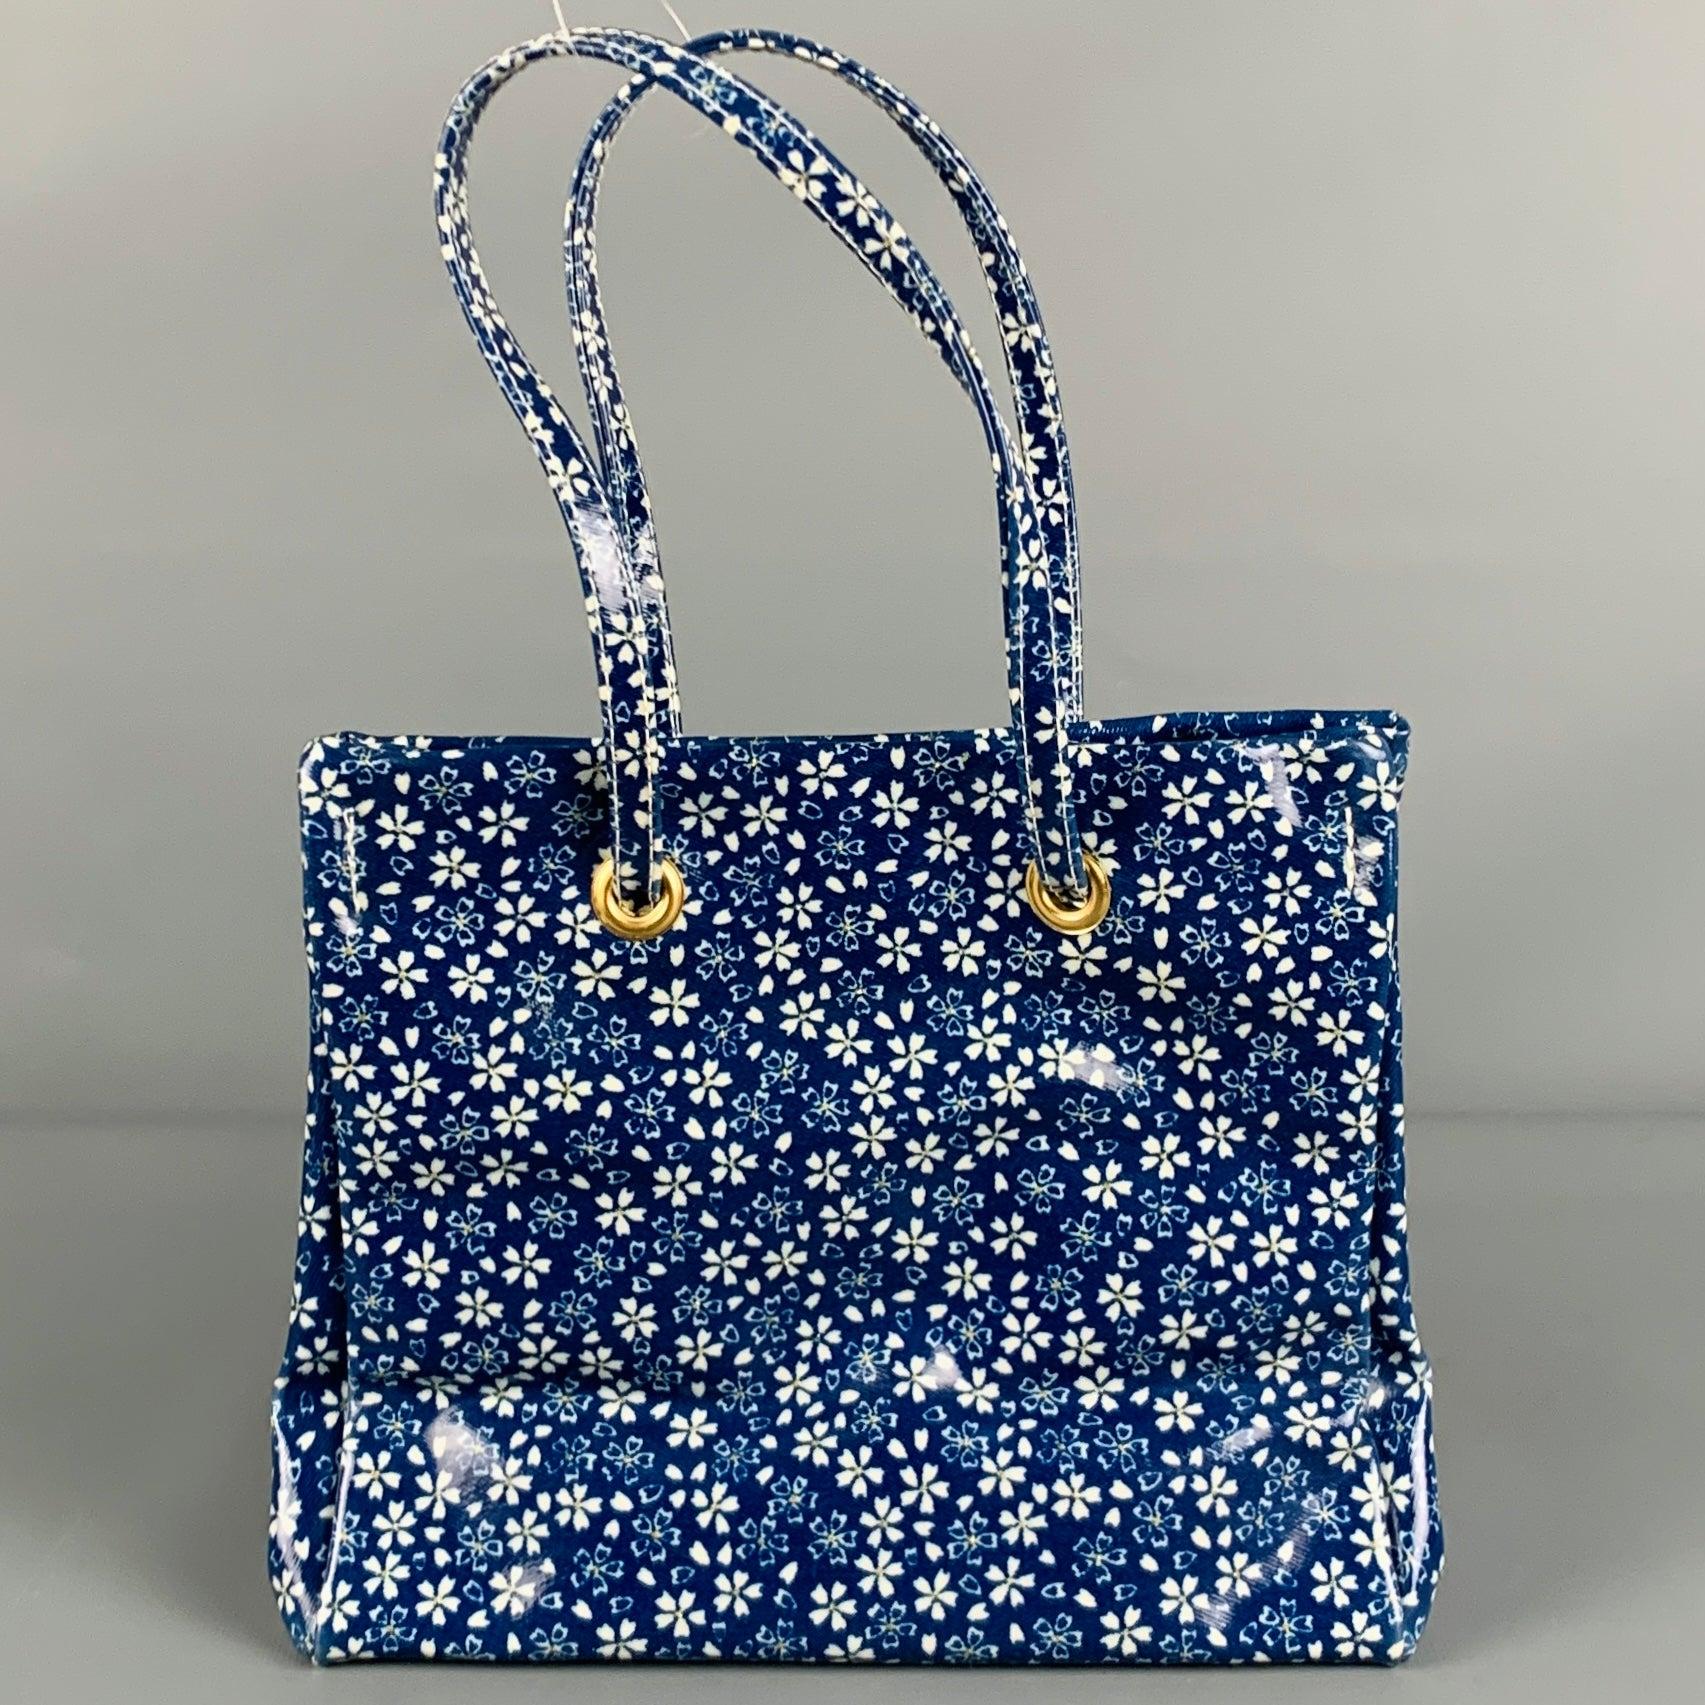 Men's ROBERTO CAVALLI Blue White Floral Tote Handbag